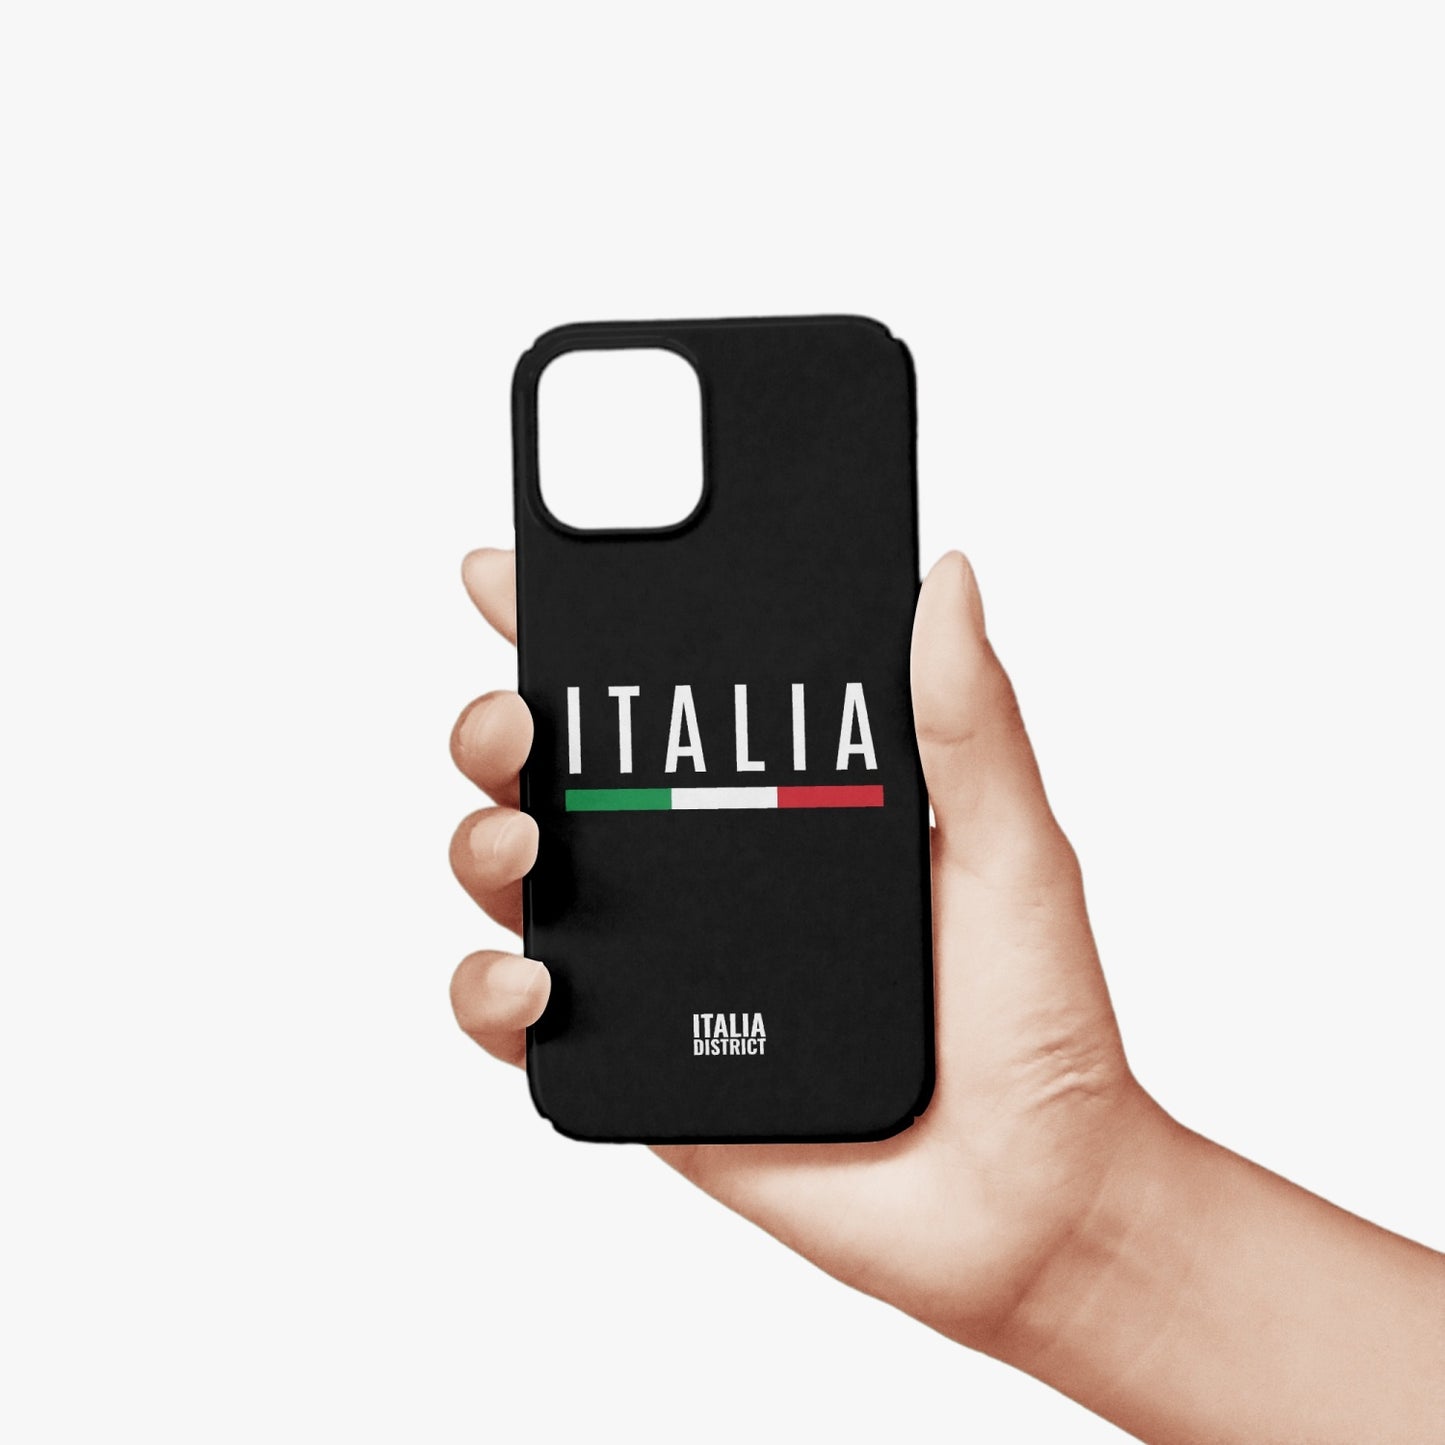 Italy Black Phone Case iPhone 11 Pro